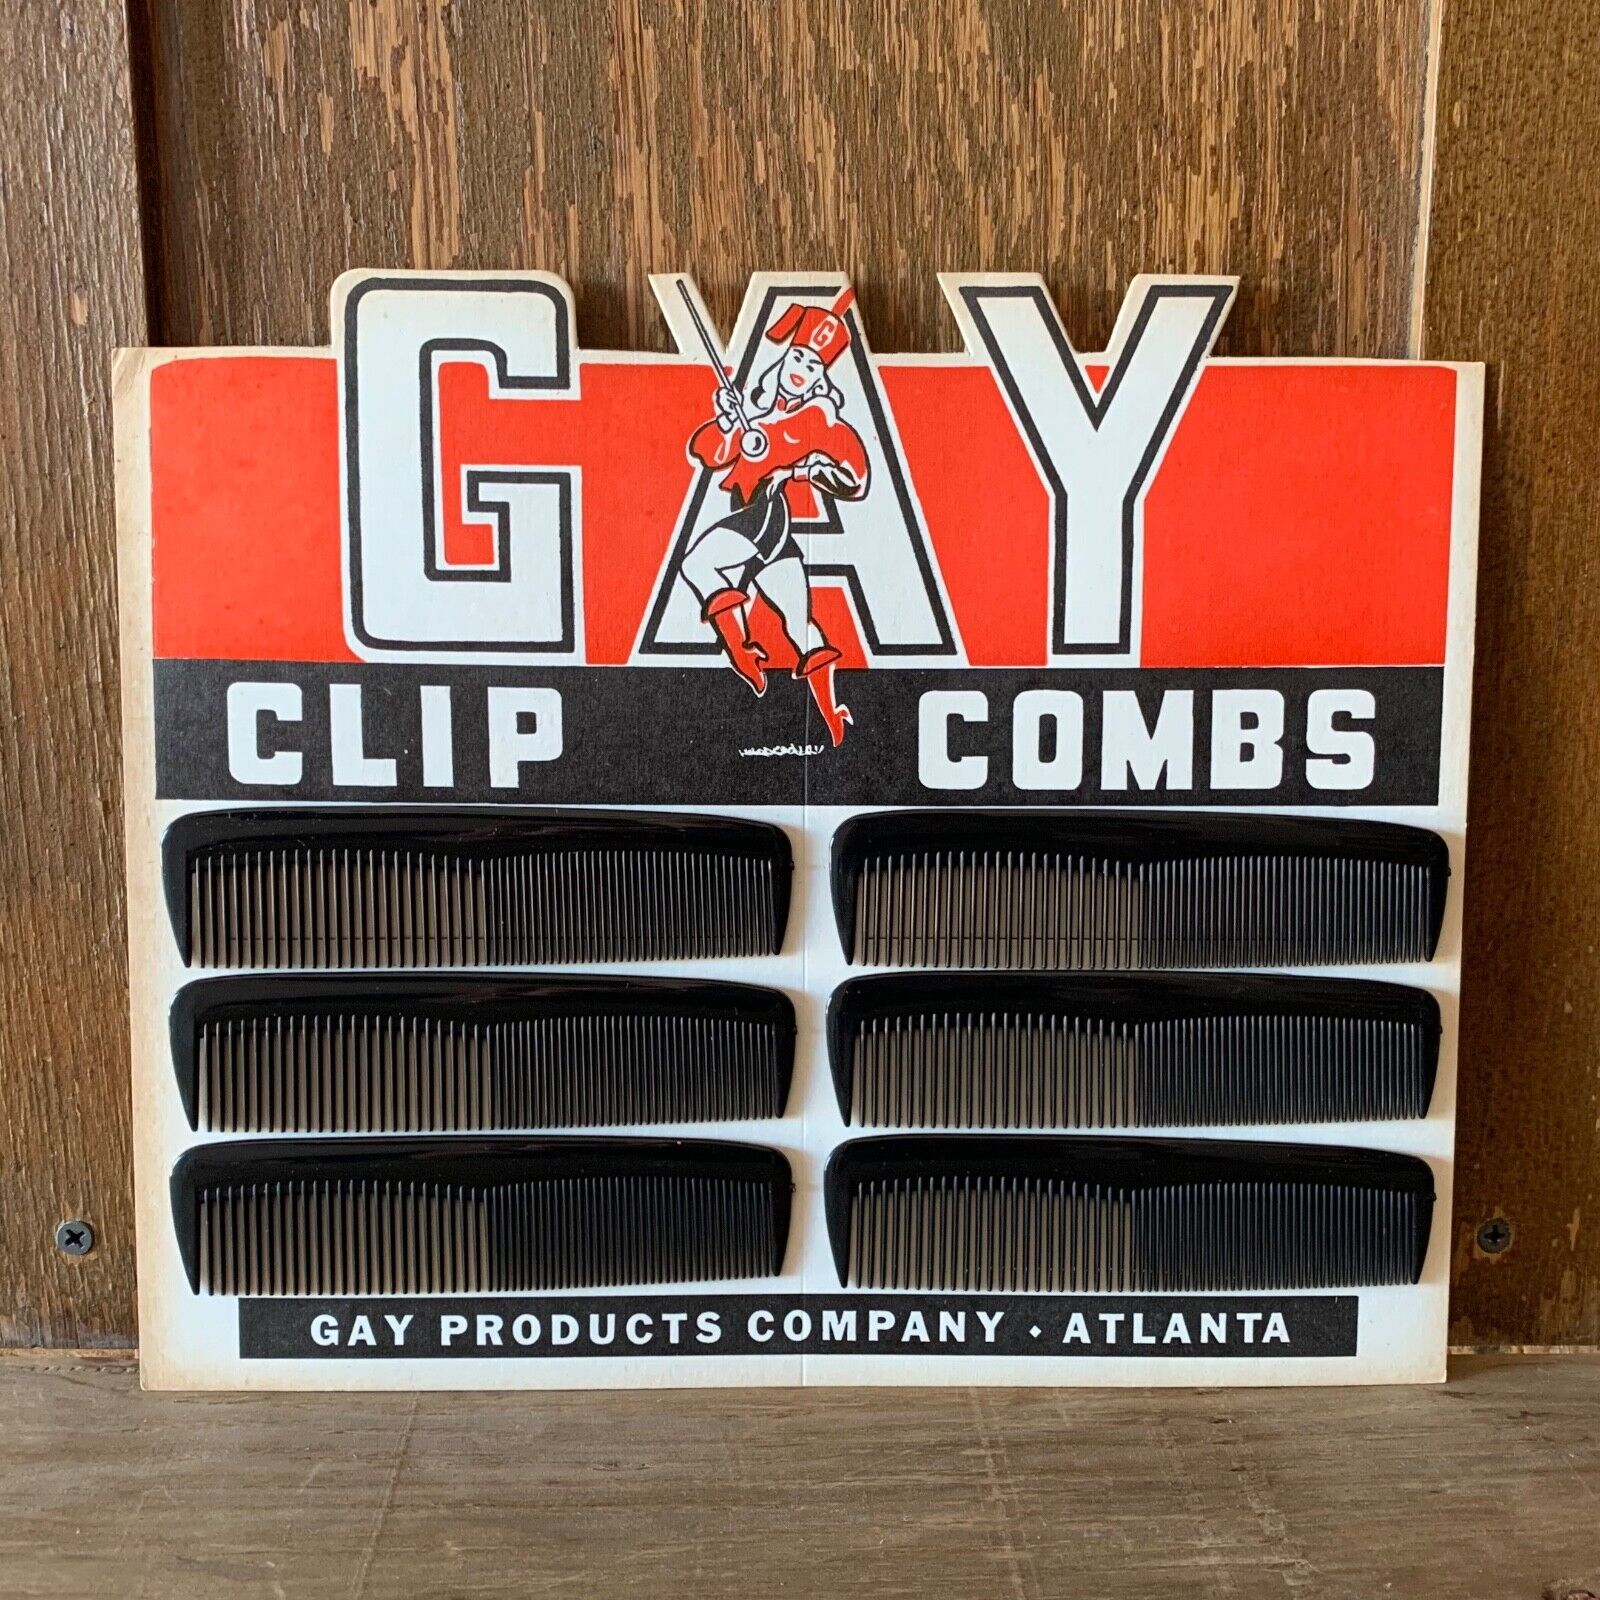 Vintage Original 1950s GAY CLIP COMBS Store SHOP DISPLAY Gay Products Co NOS